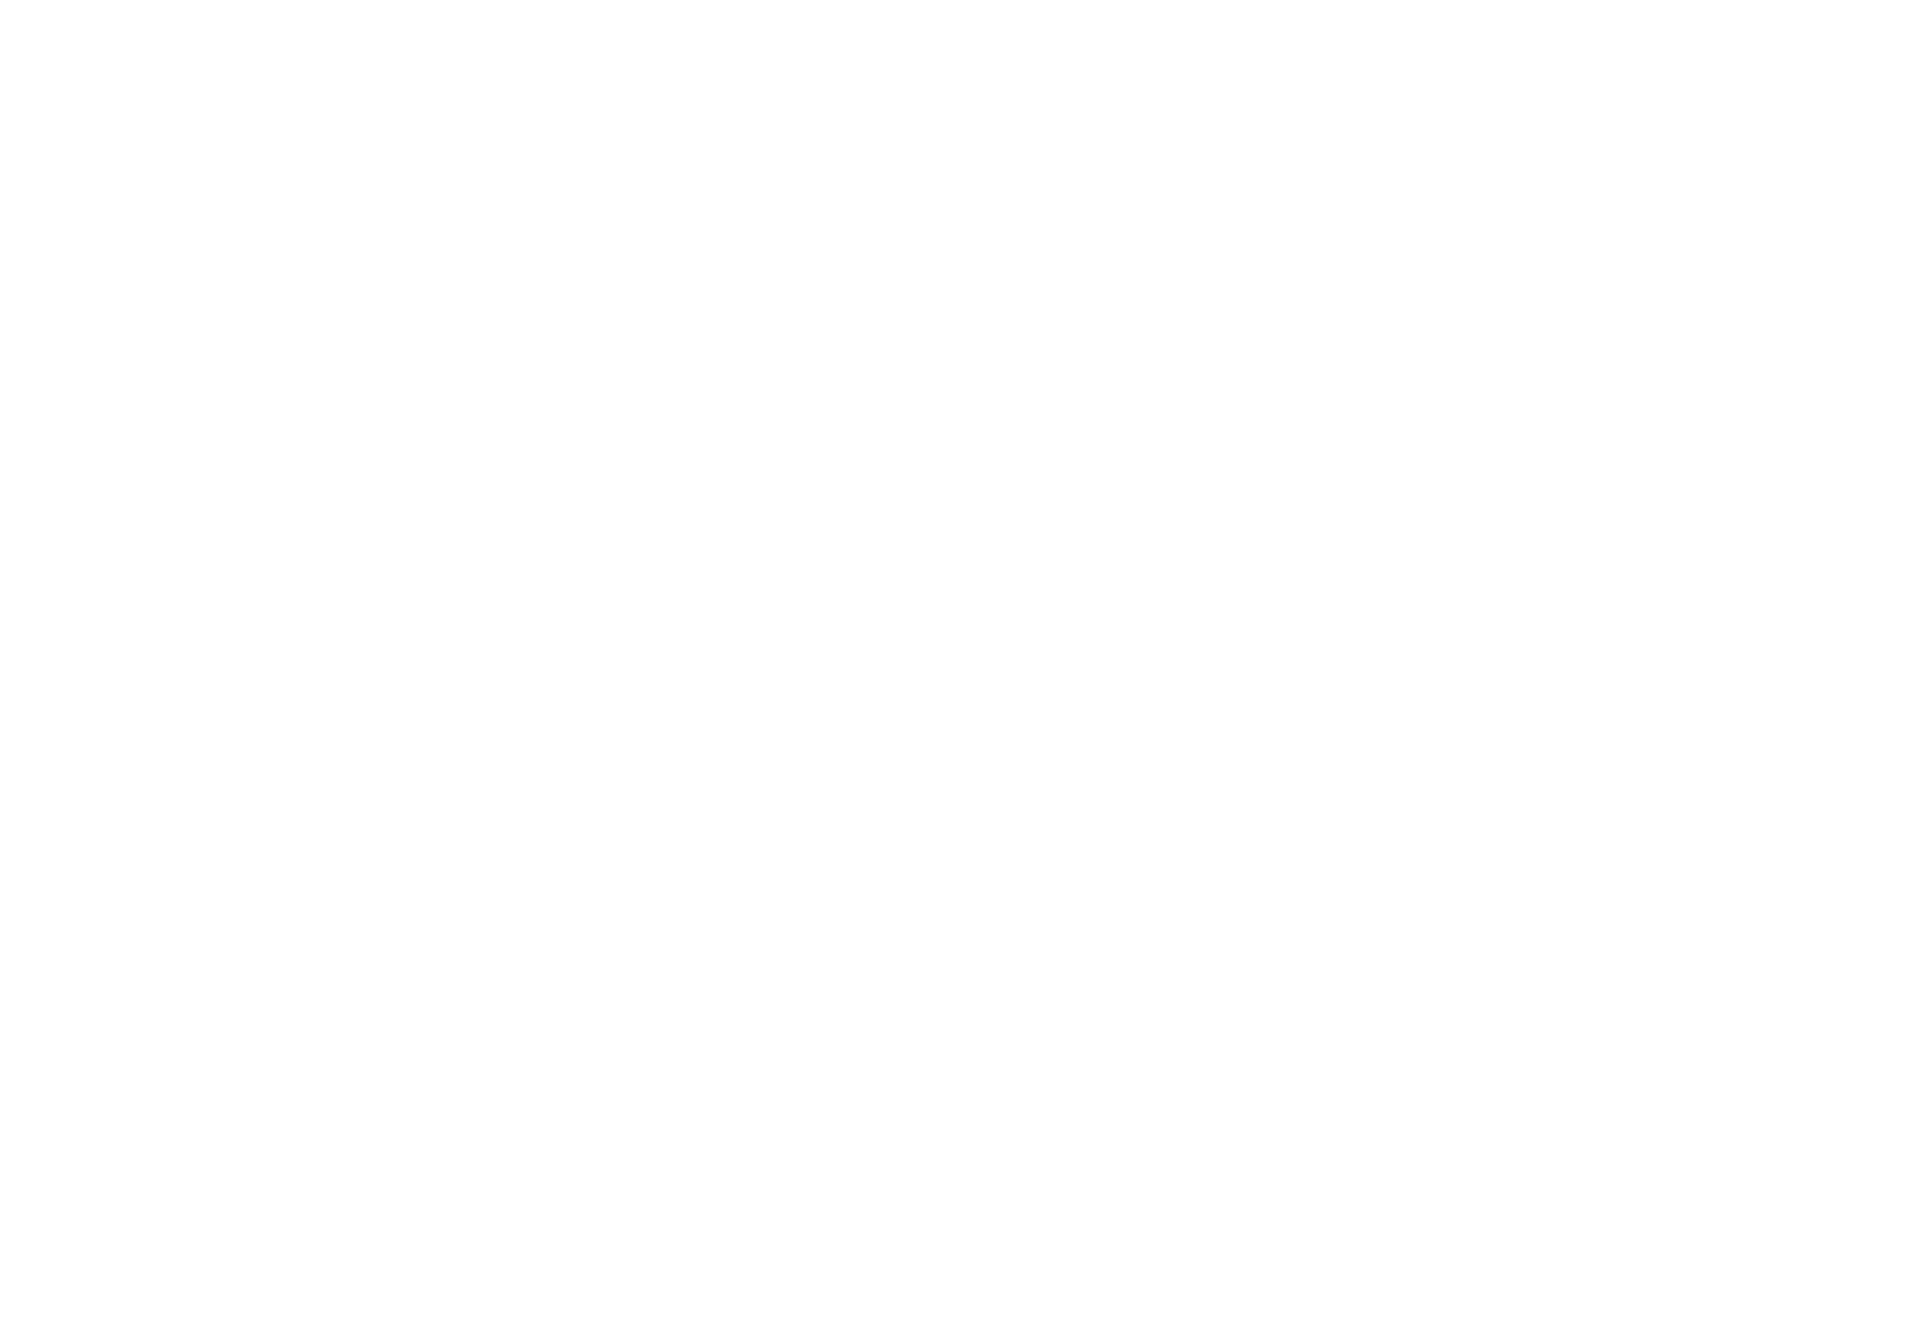 Housefly decor logo op een donkere achtergrond.